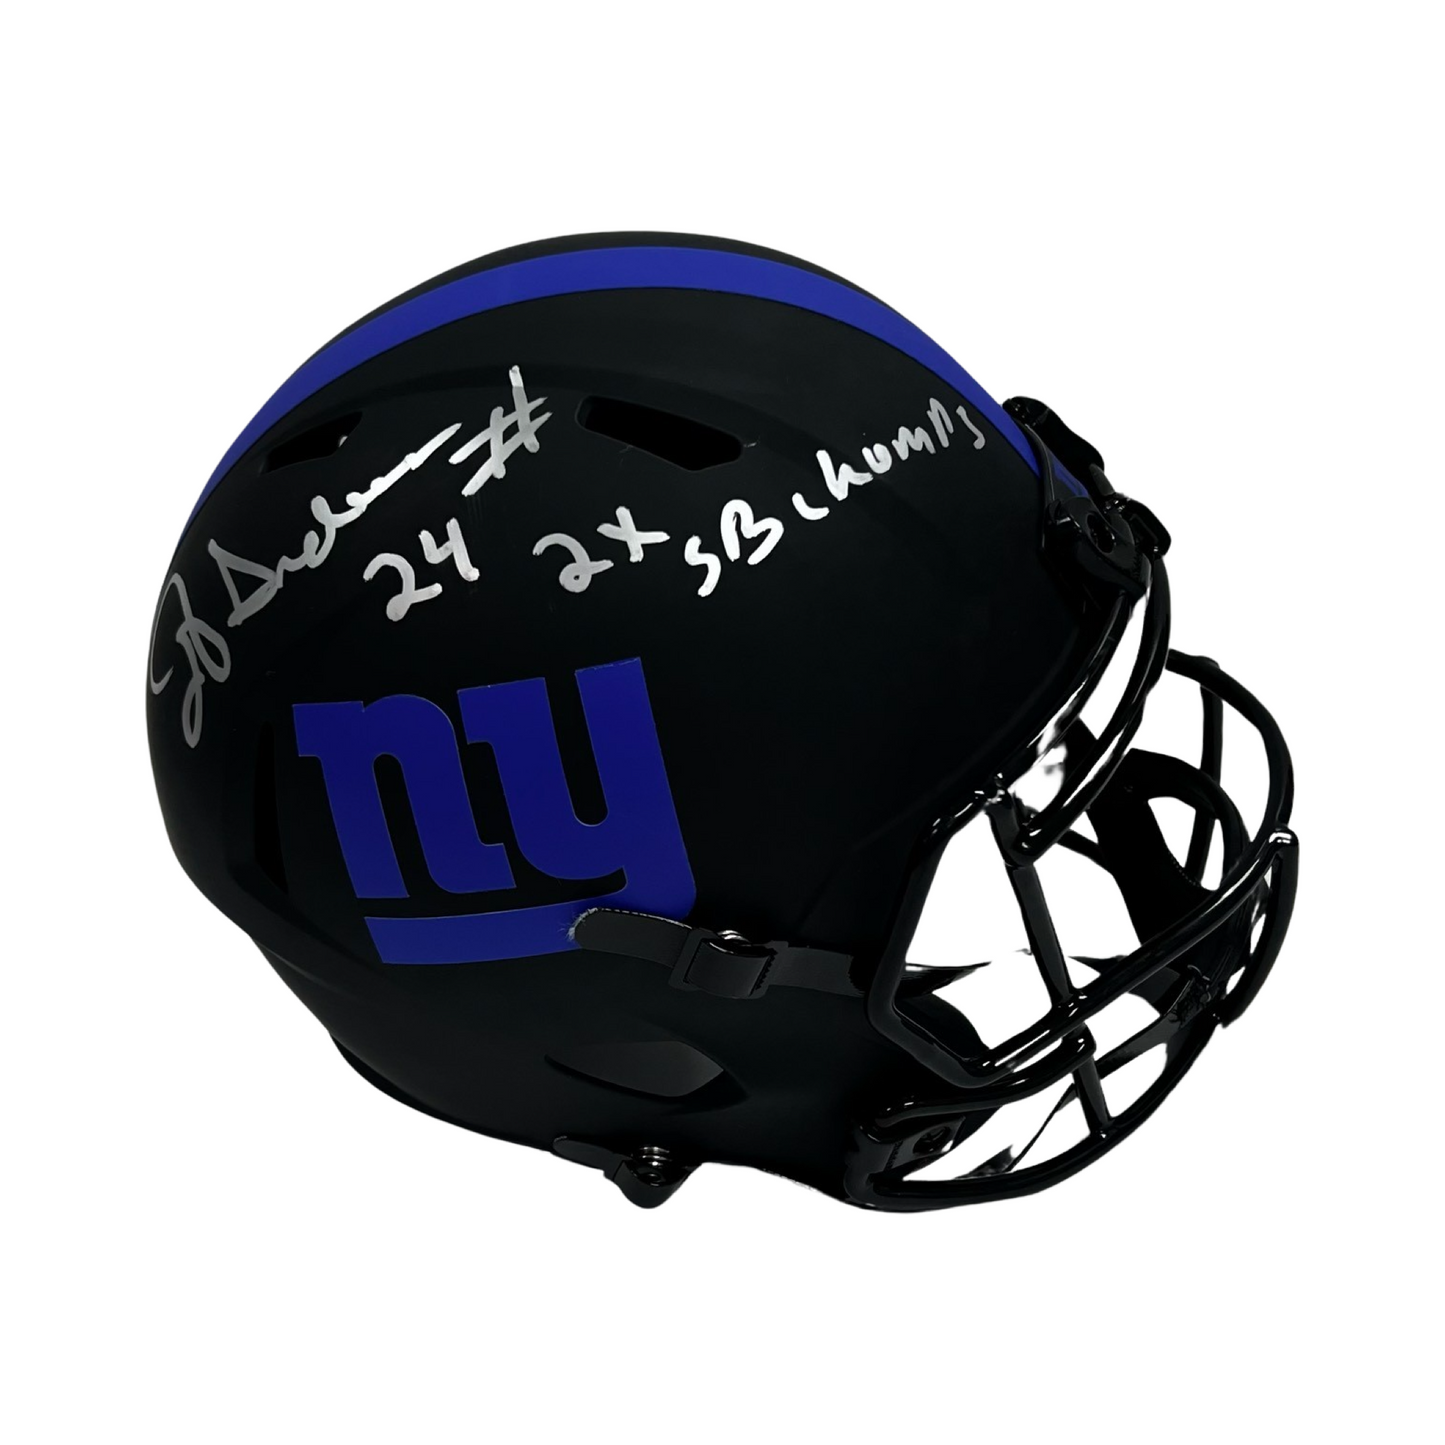 OJ Anderson Autographed New York Giants Eclipse Replica Helmet "2x SB Champs" Inscription Steiner CX